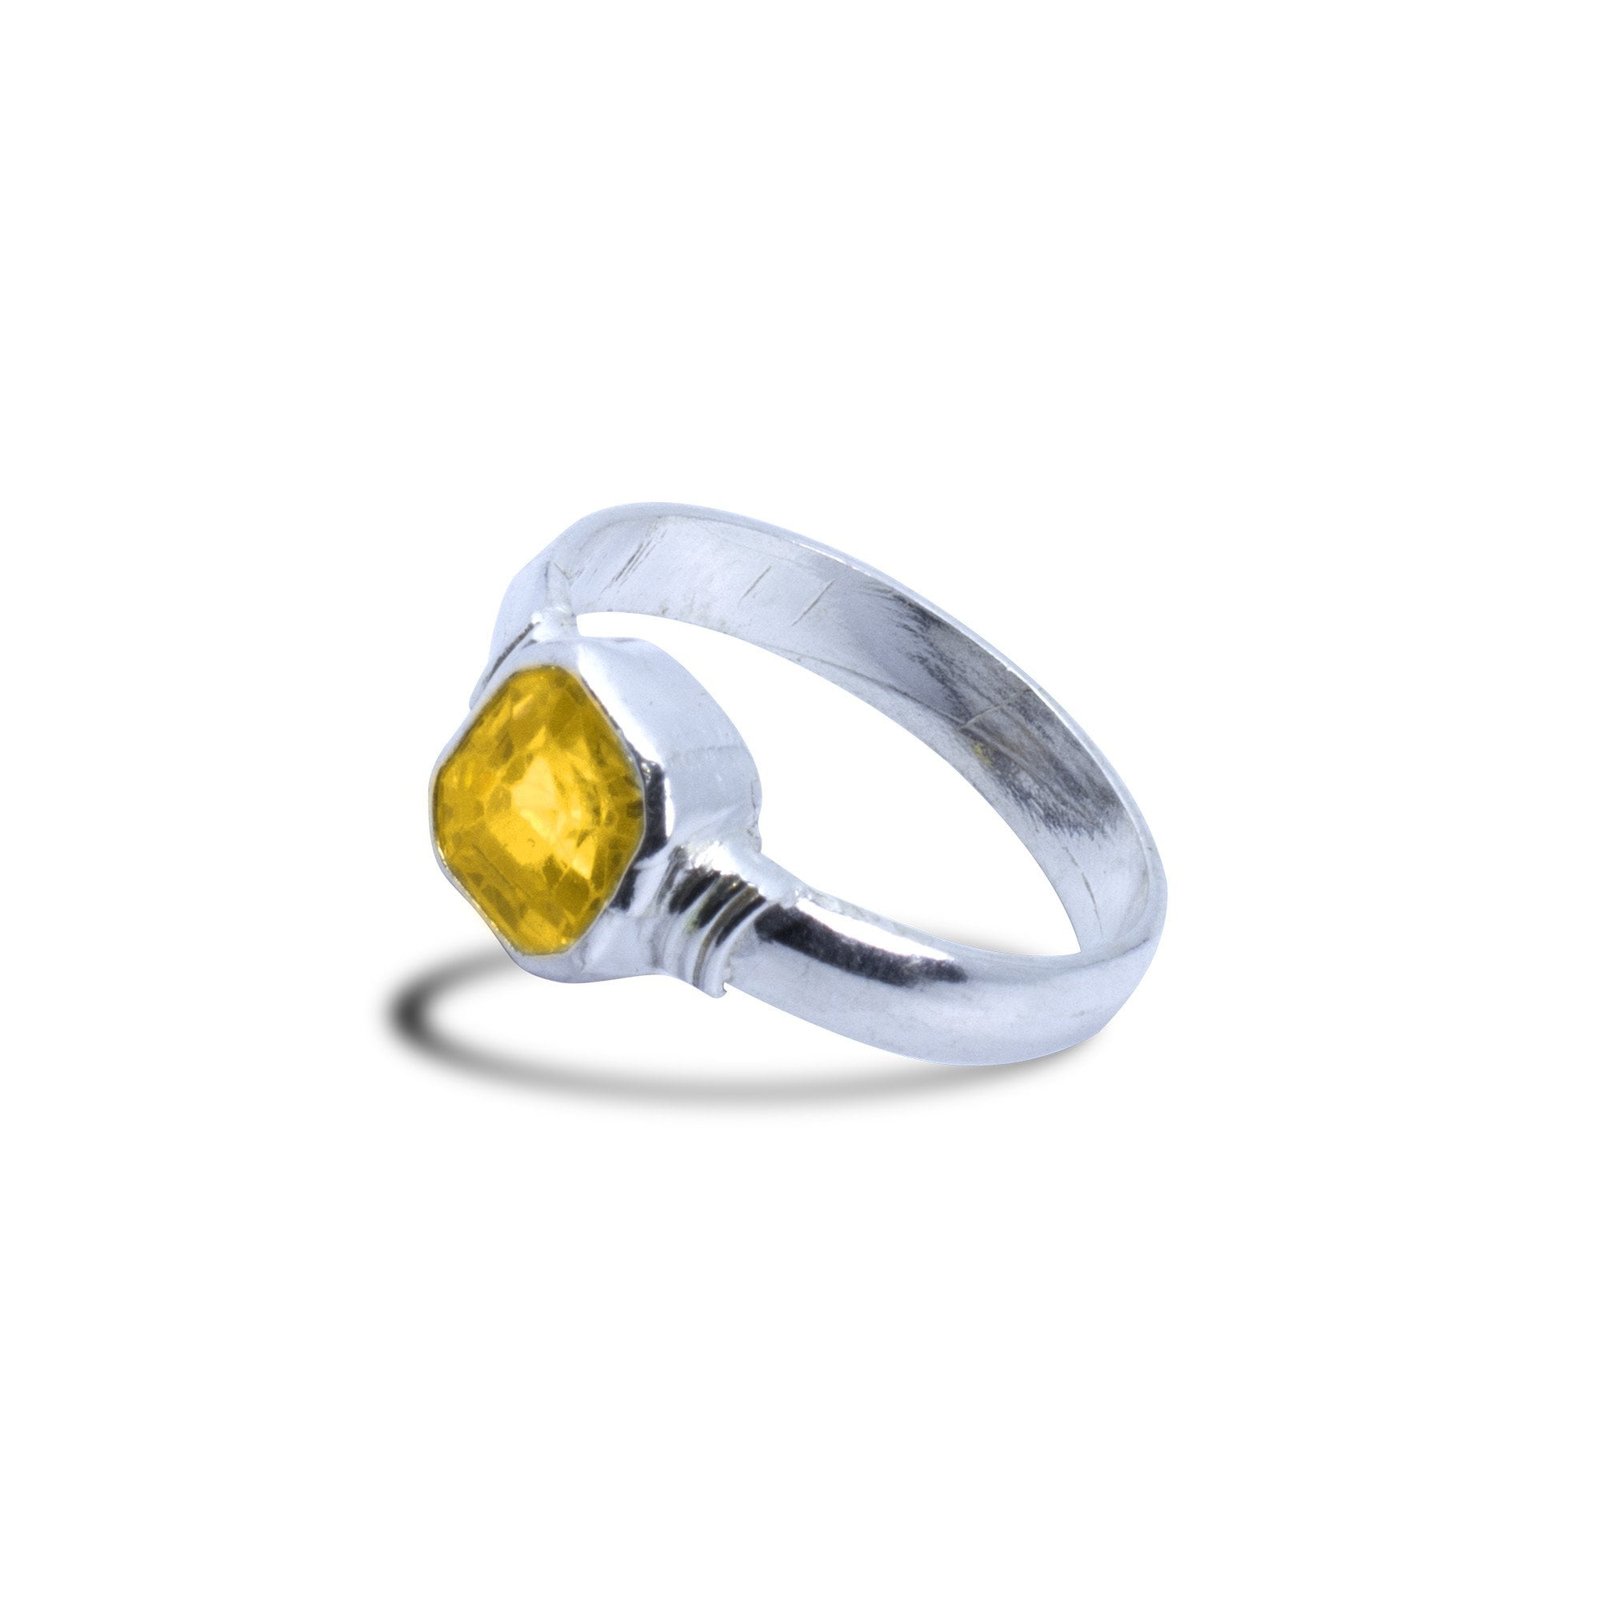 13 Nag ring design ideas | ring designs, engagement rings, sterling silver  rings